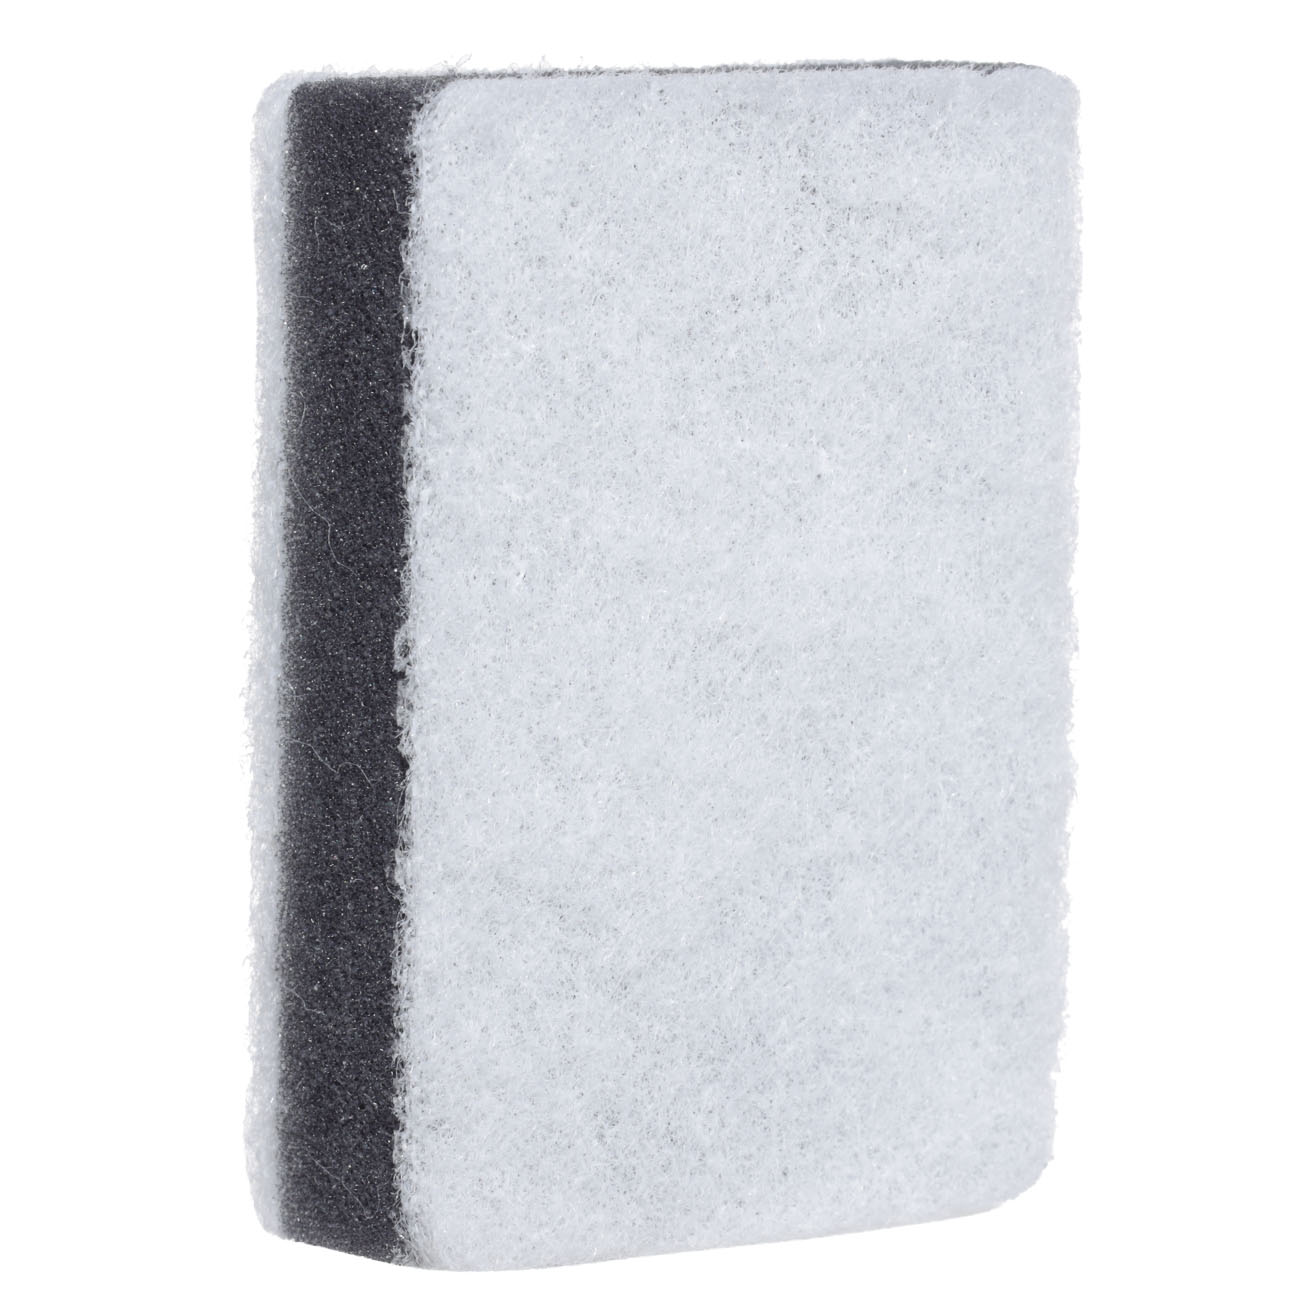 Dish washing sponge, 10x7 cm, 3 pcs, foam rubber/non-abrasive, black and white, Black clean изображение № 3